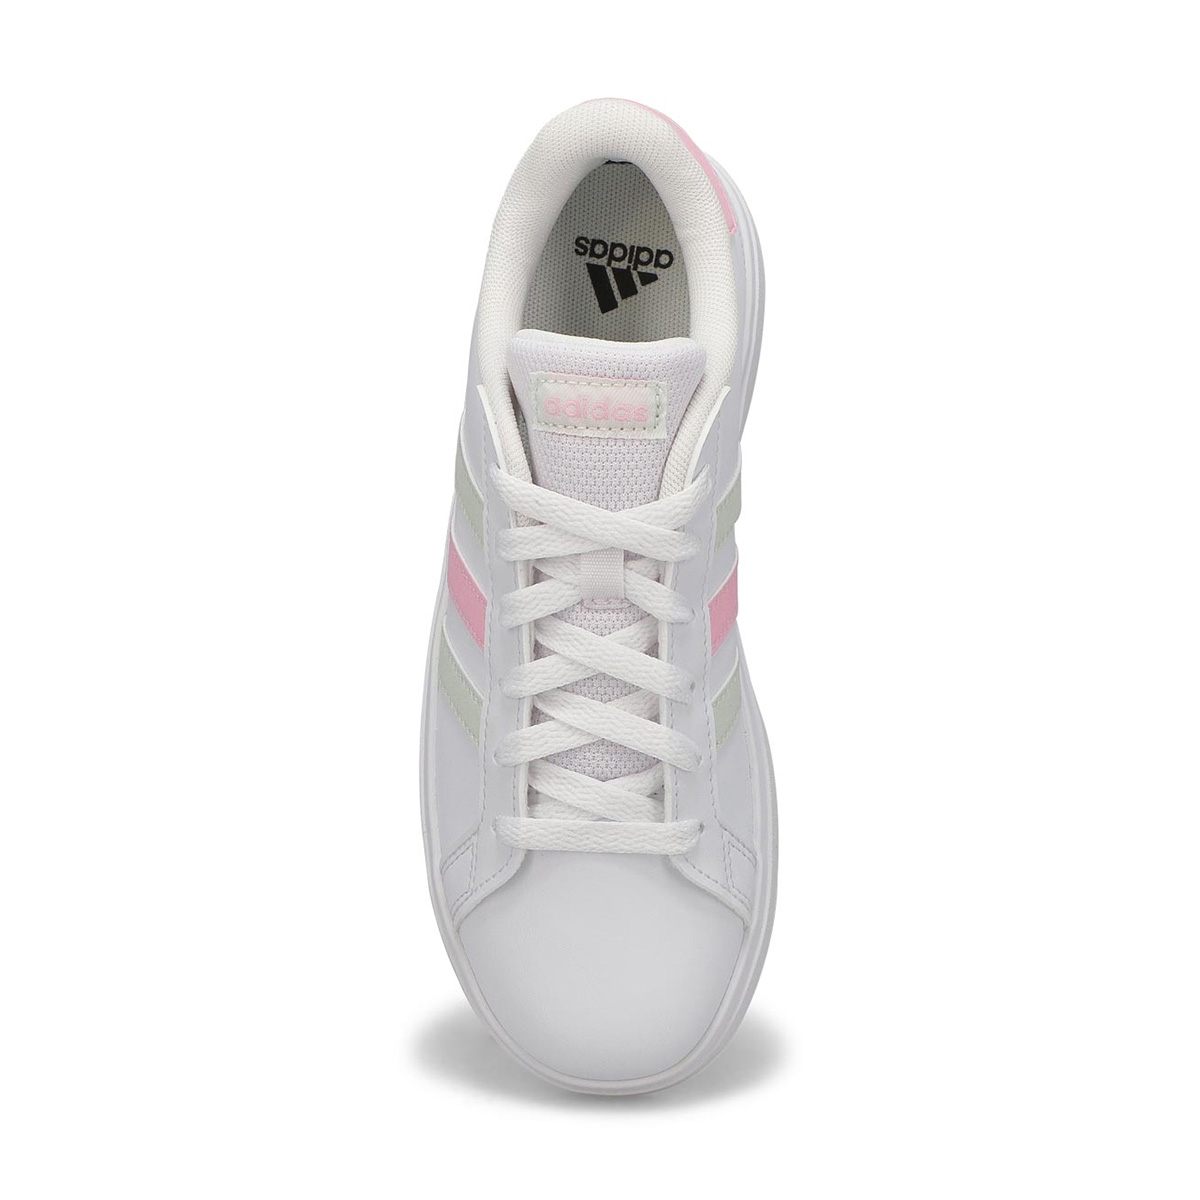 Girls'  Grand Court 2.0 K Sneaker - White/Jade/Pink